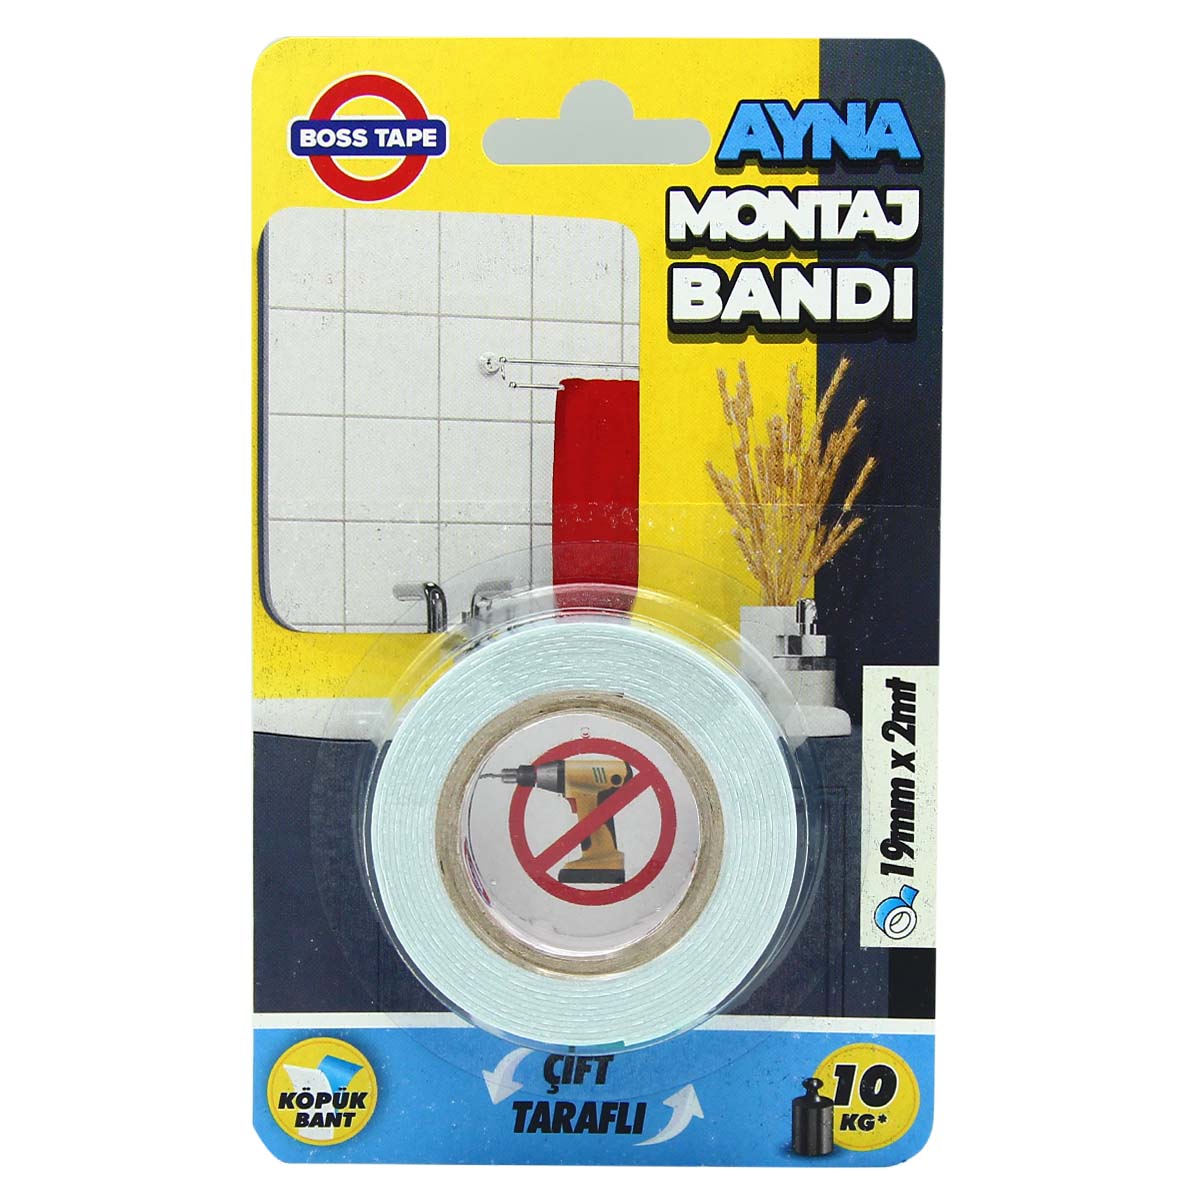 ayna-montaj-bandi-boss-tape-1